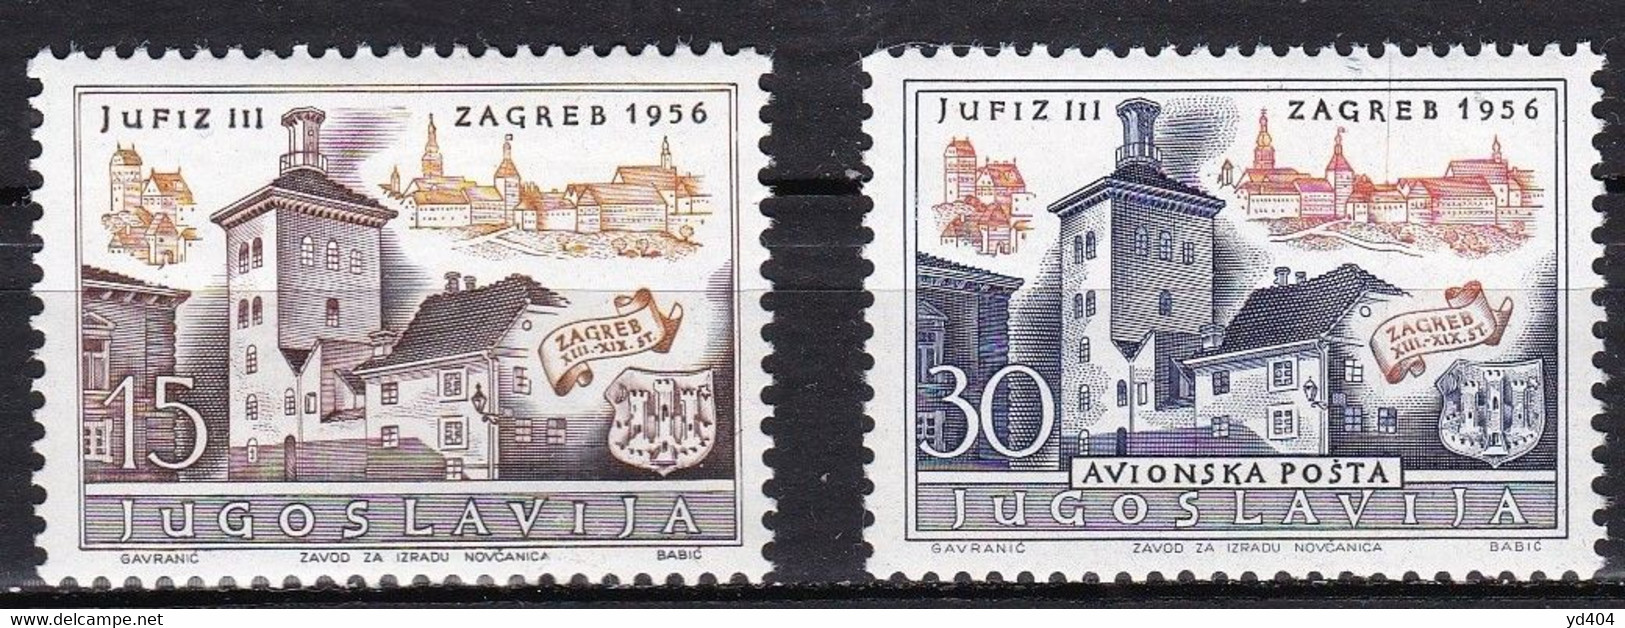 YU431 – YOUGOSLAVIA – AIRMAIL - 1956 – PHIL. EXHIB. JUFIZ III – SG # 817/8 MNH 9 € - Poste Aérienne